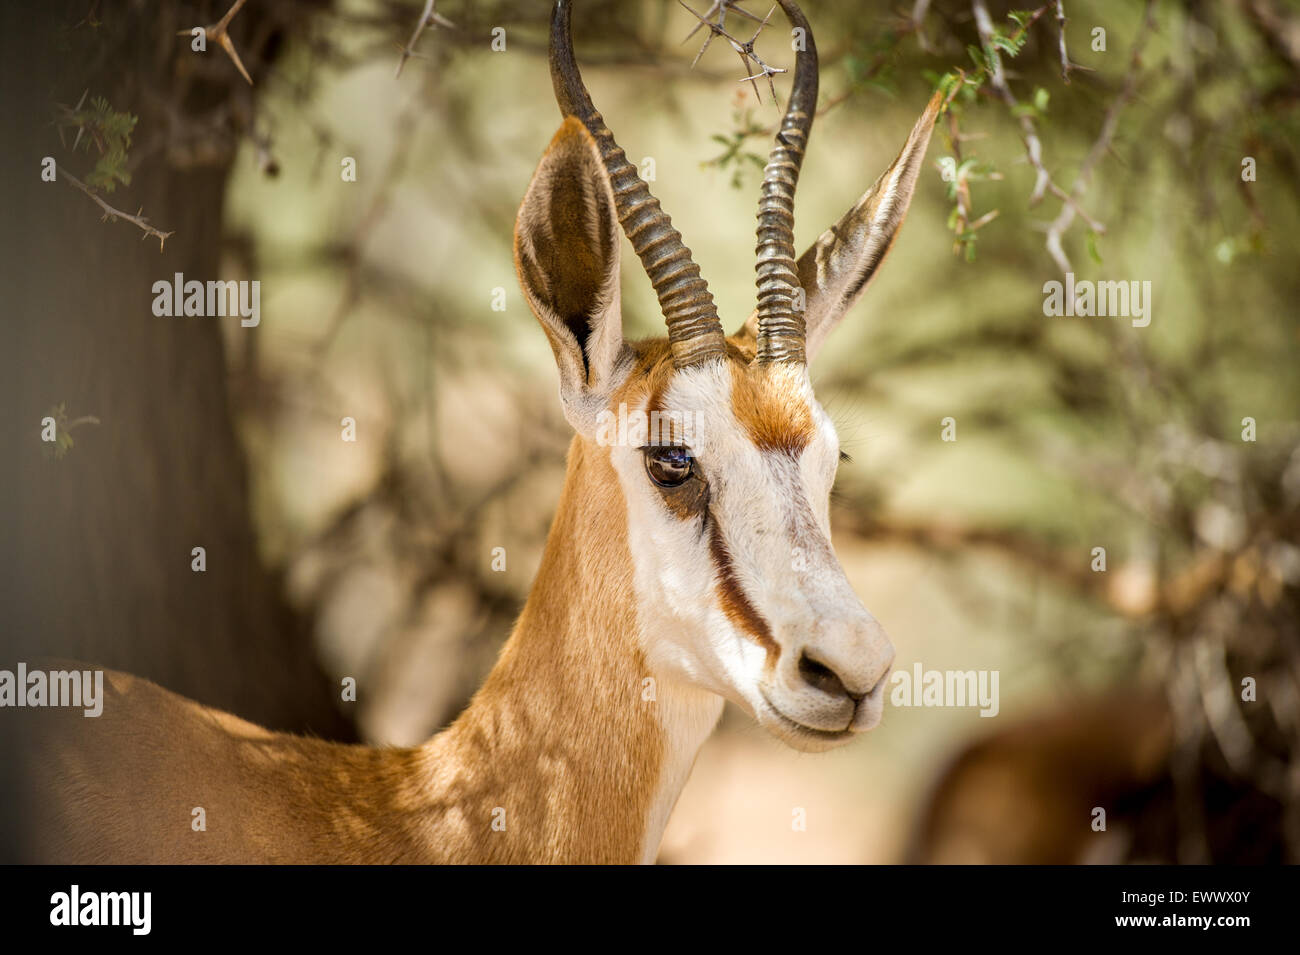 Kgalagadi Transfrontier Park, South Africa - springbok (Antidorcas marsupialis) Stock Photo